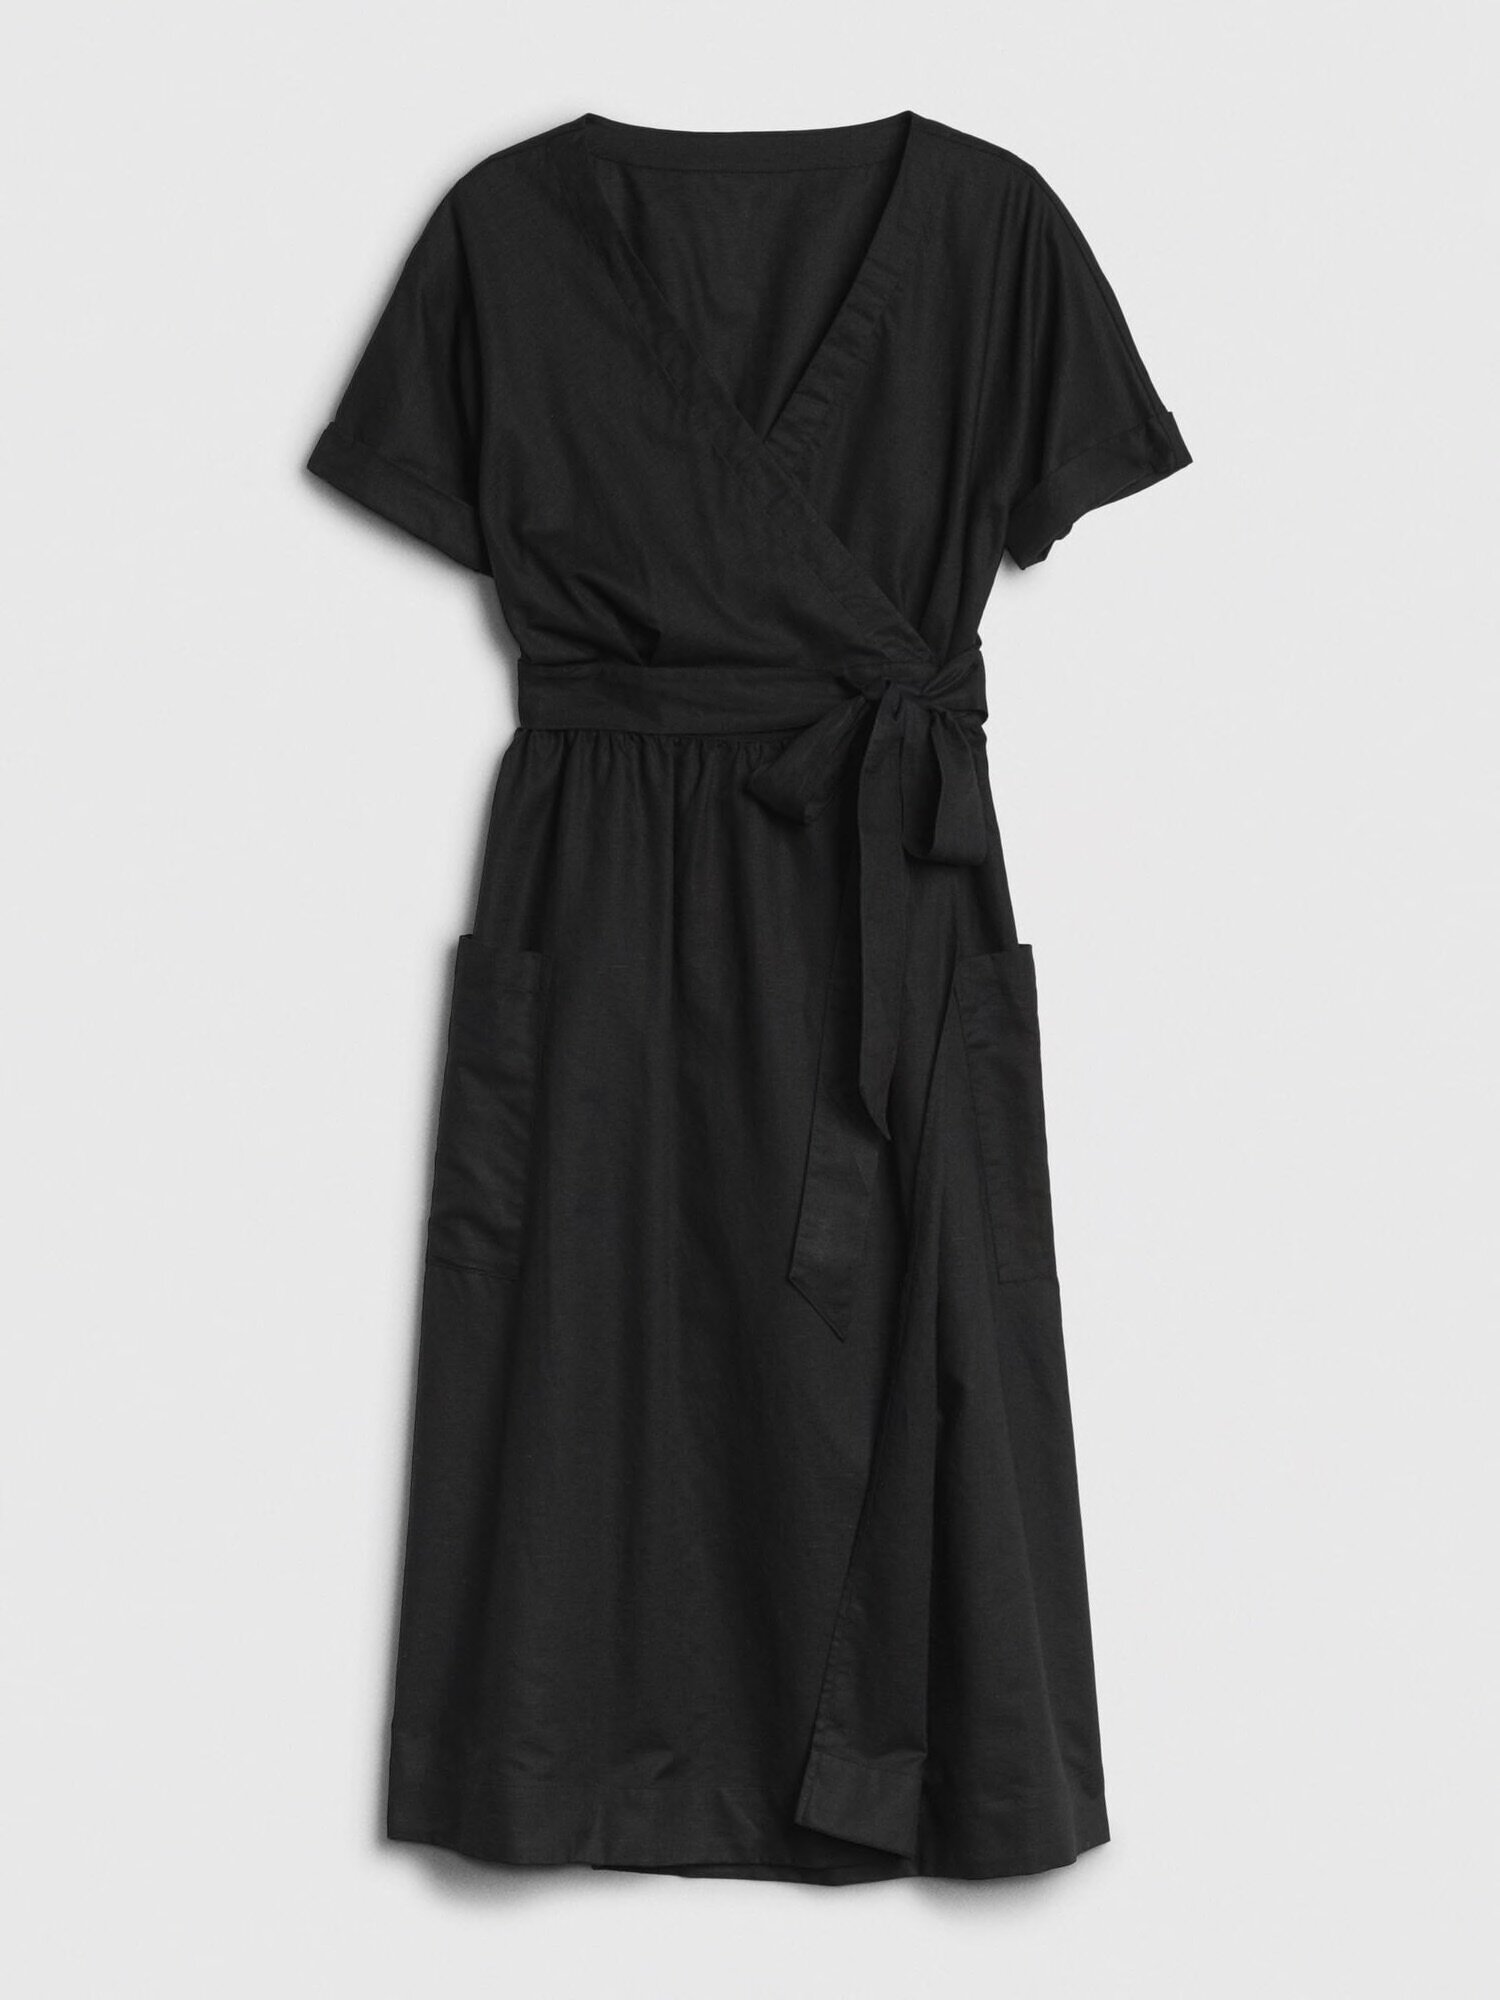 Dress, £64.95, Gap